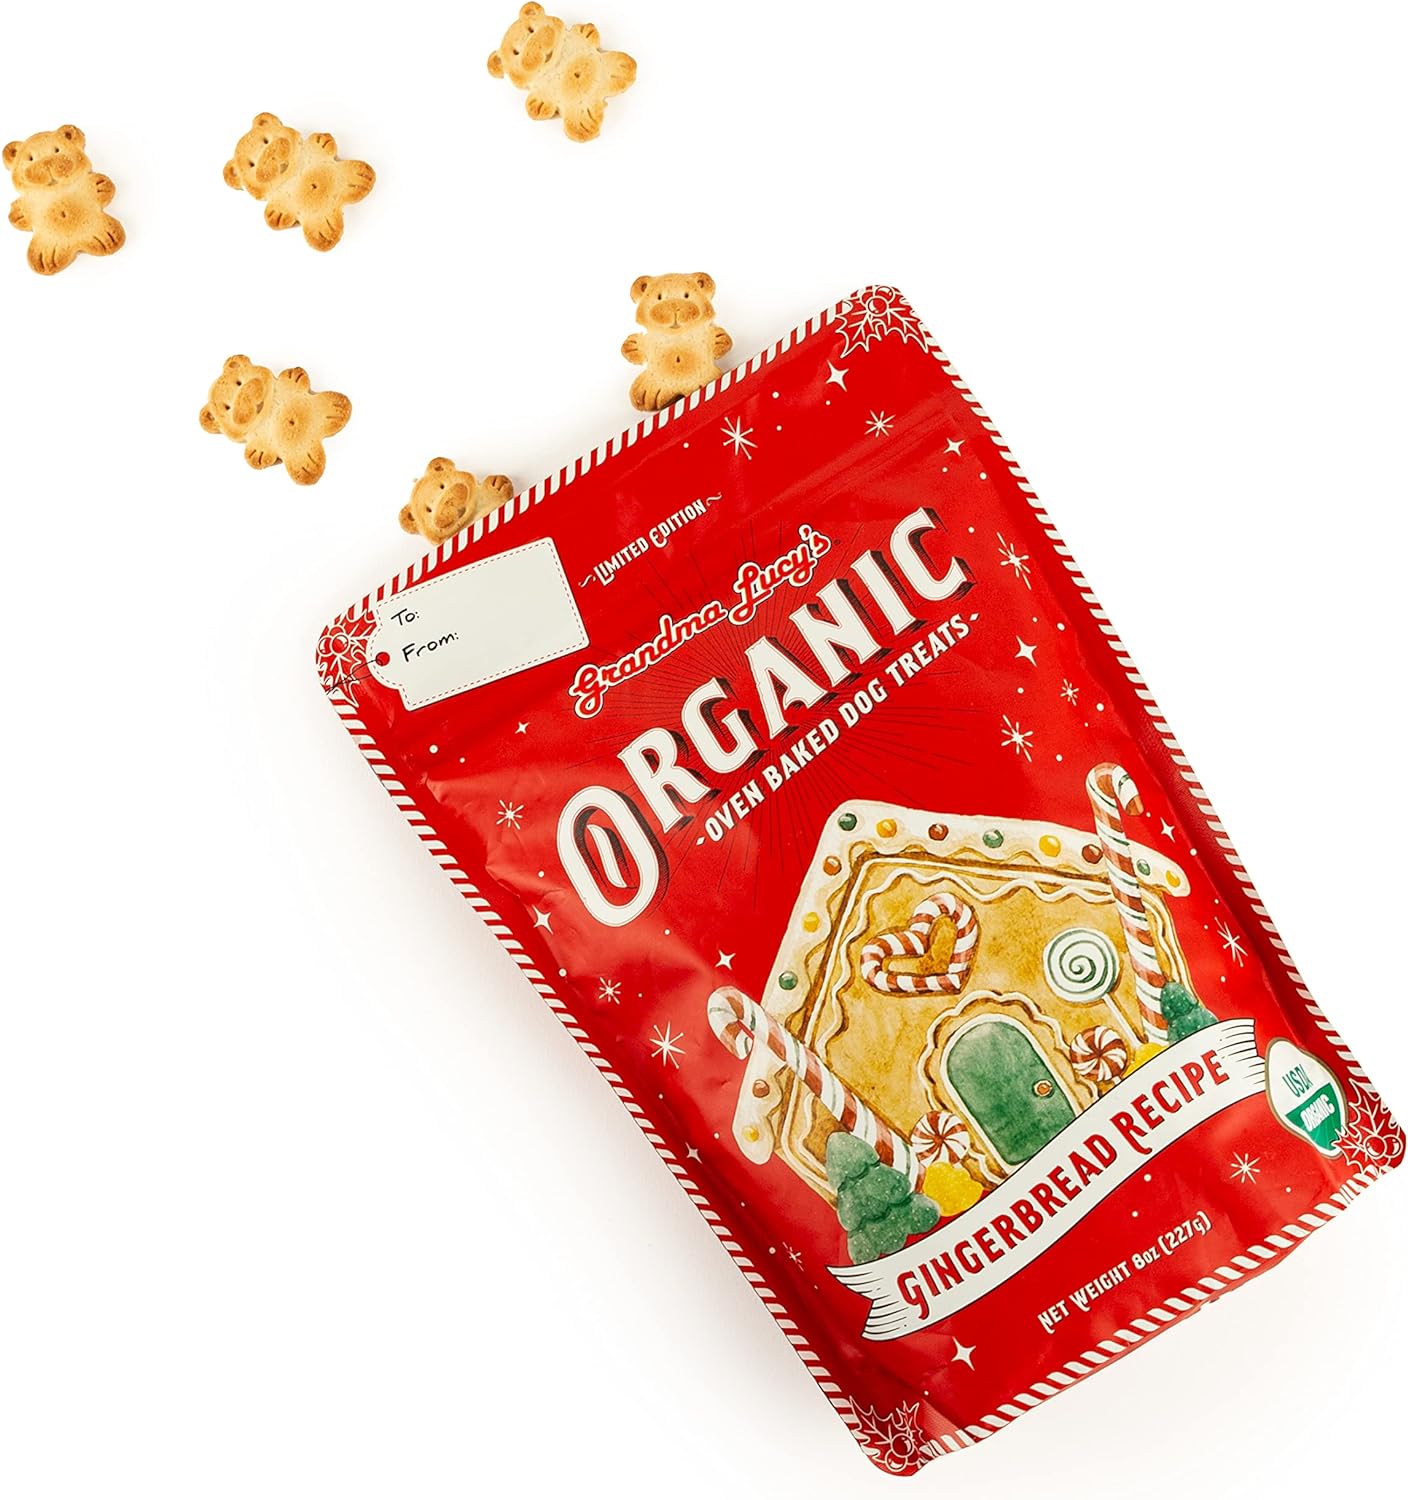 Grandma Lucy’s Organic Limited Edition Gingerbread Recipe 8 